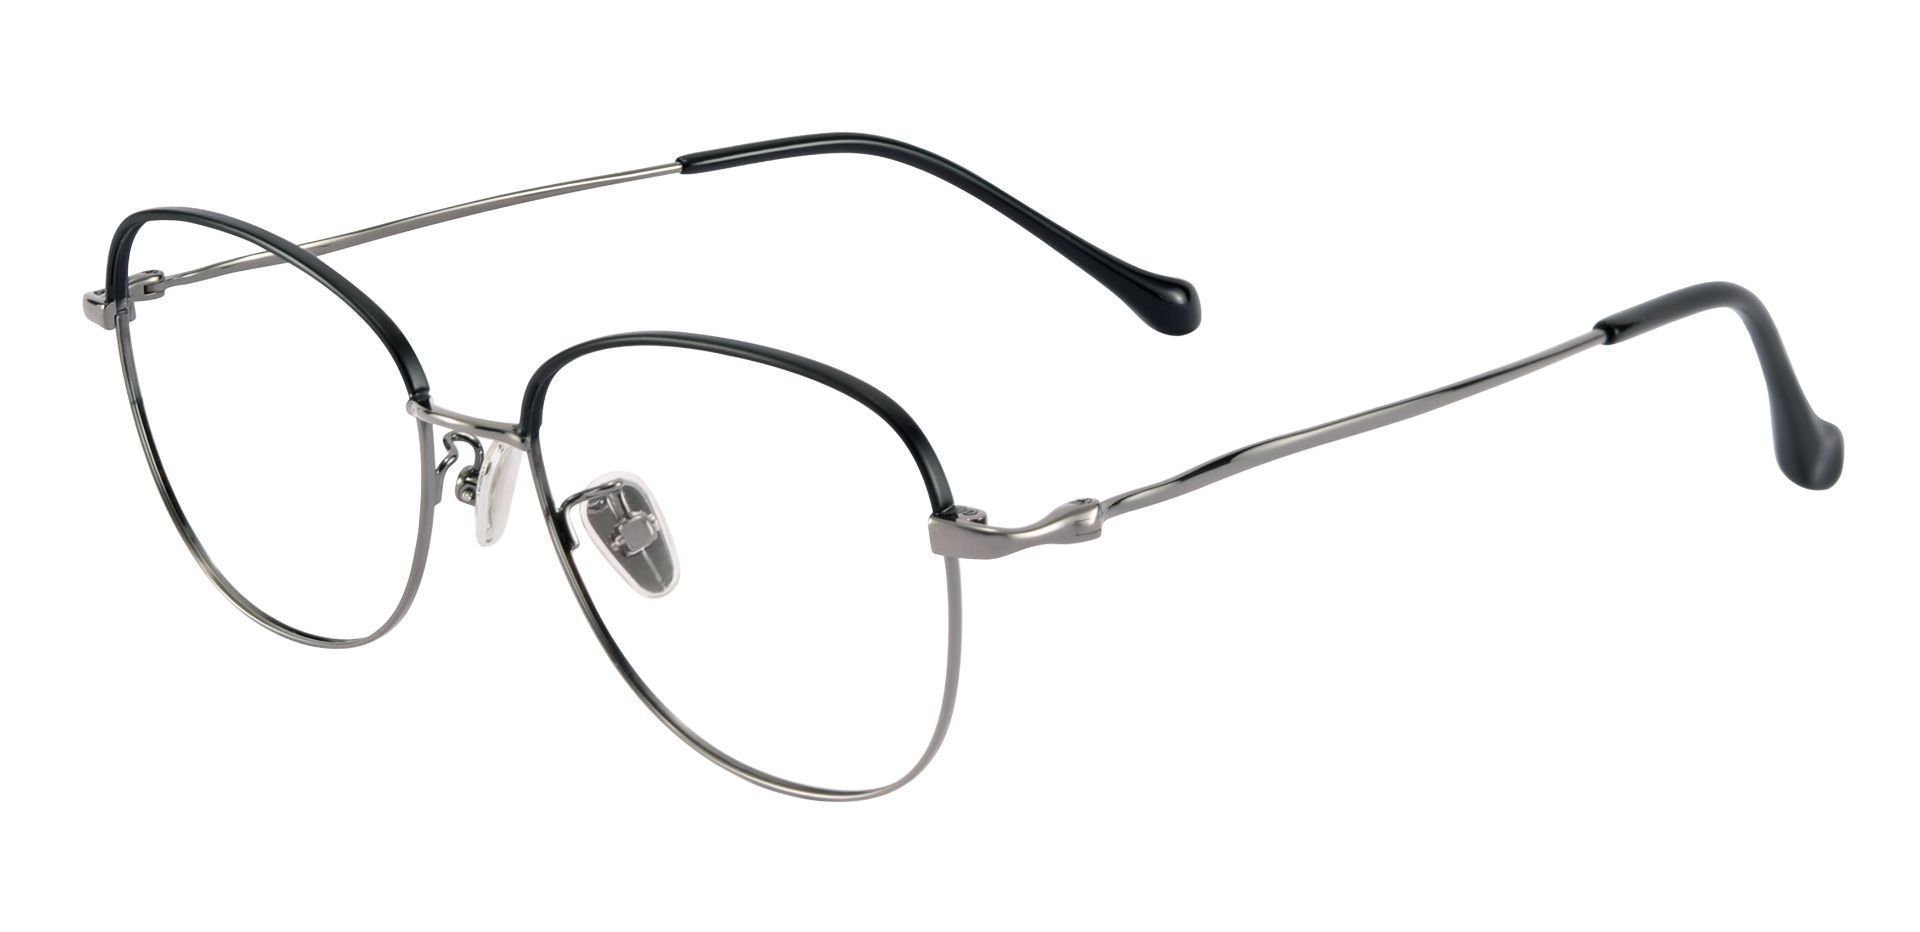 Belcourt Oval Non-Rx Glasses - Black